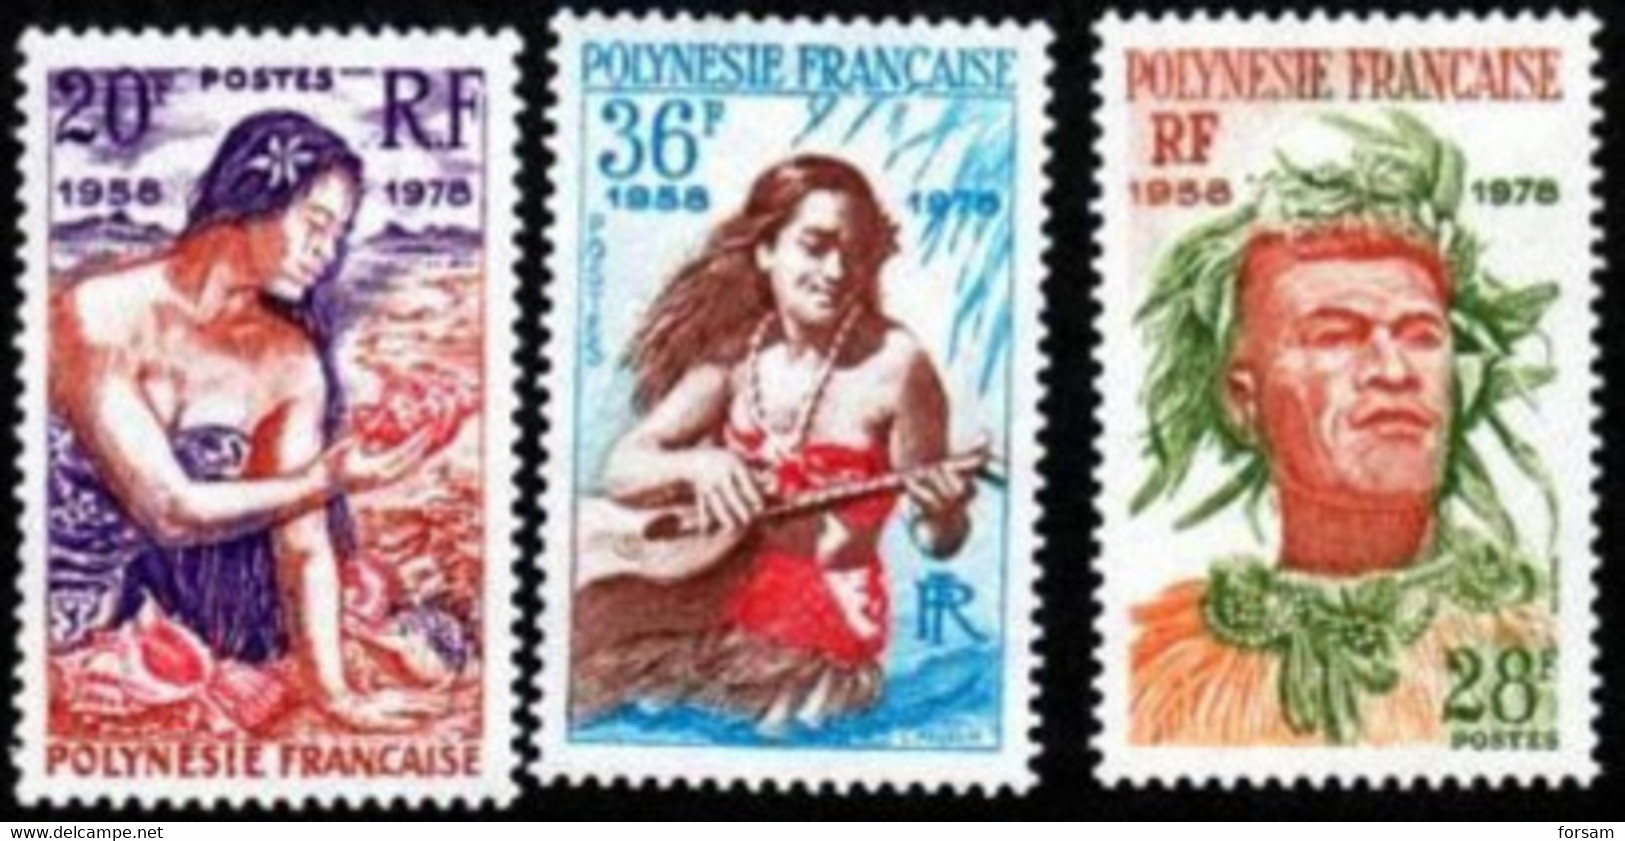 FRANCE POLYNESIA..1978..Michel # 262-264...MLH. - Nuovi